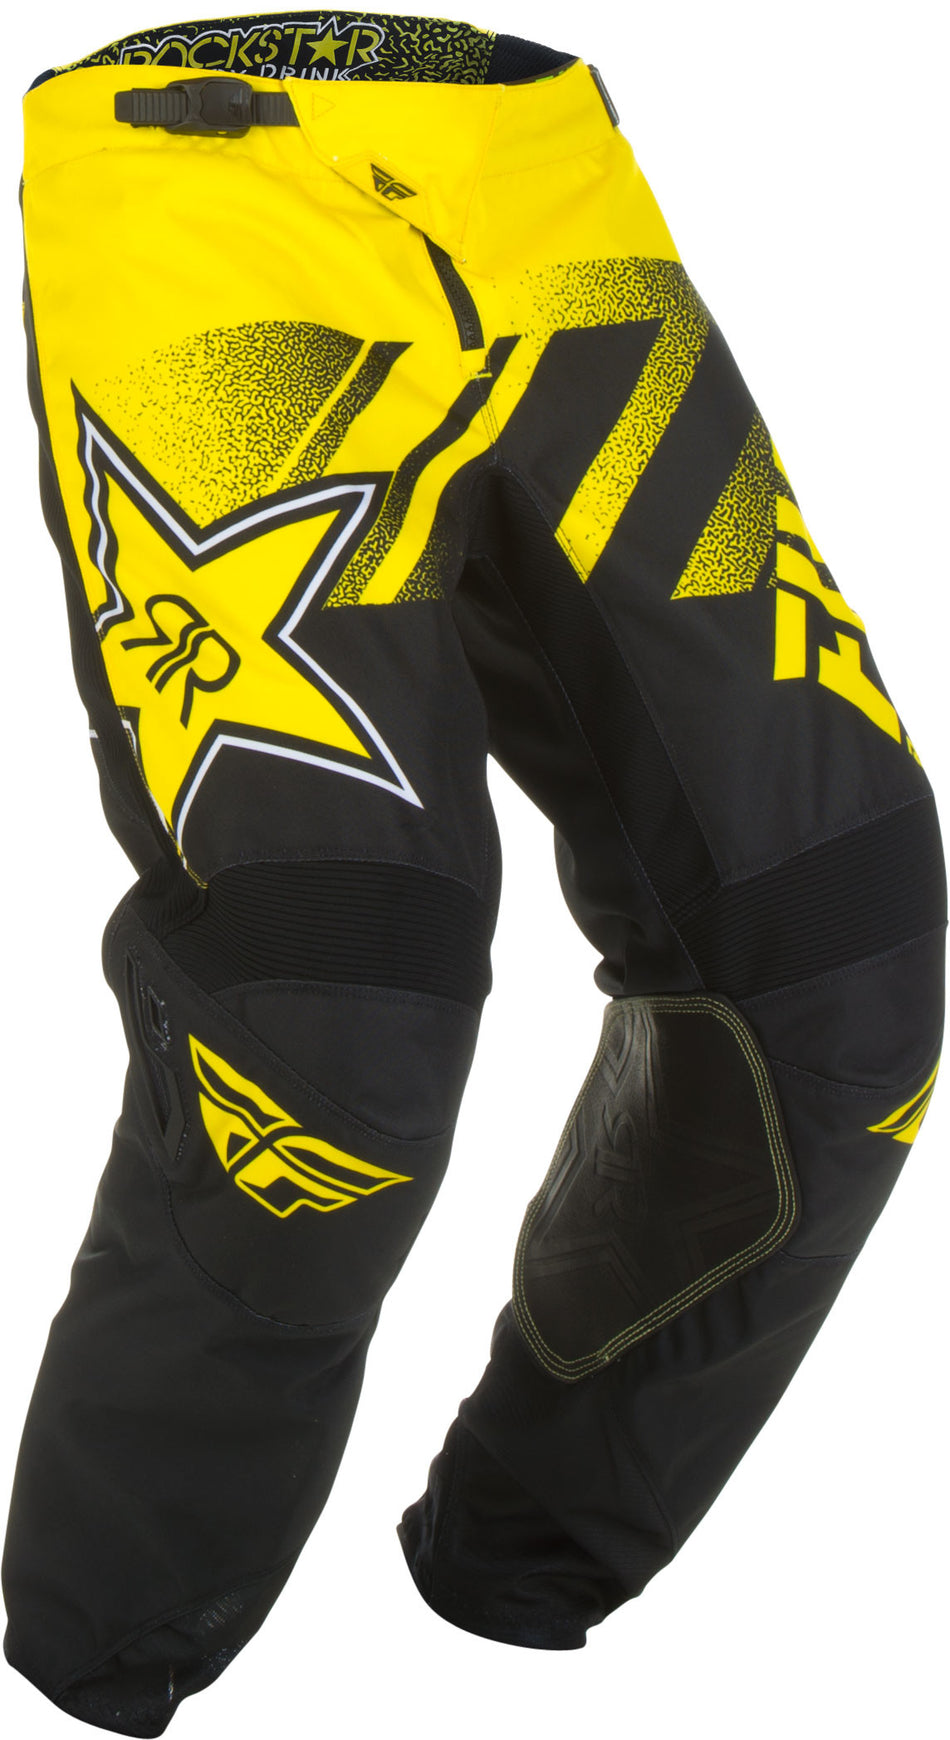 FLY RACING Kinetic Rockstar Pants Yellow/Black Sz 28s 372-33328S